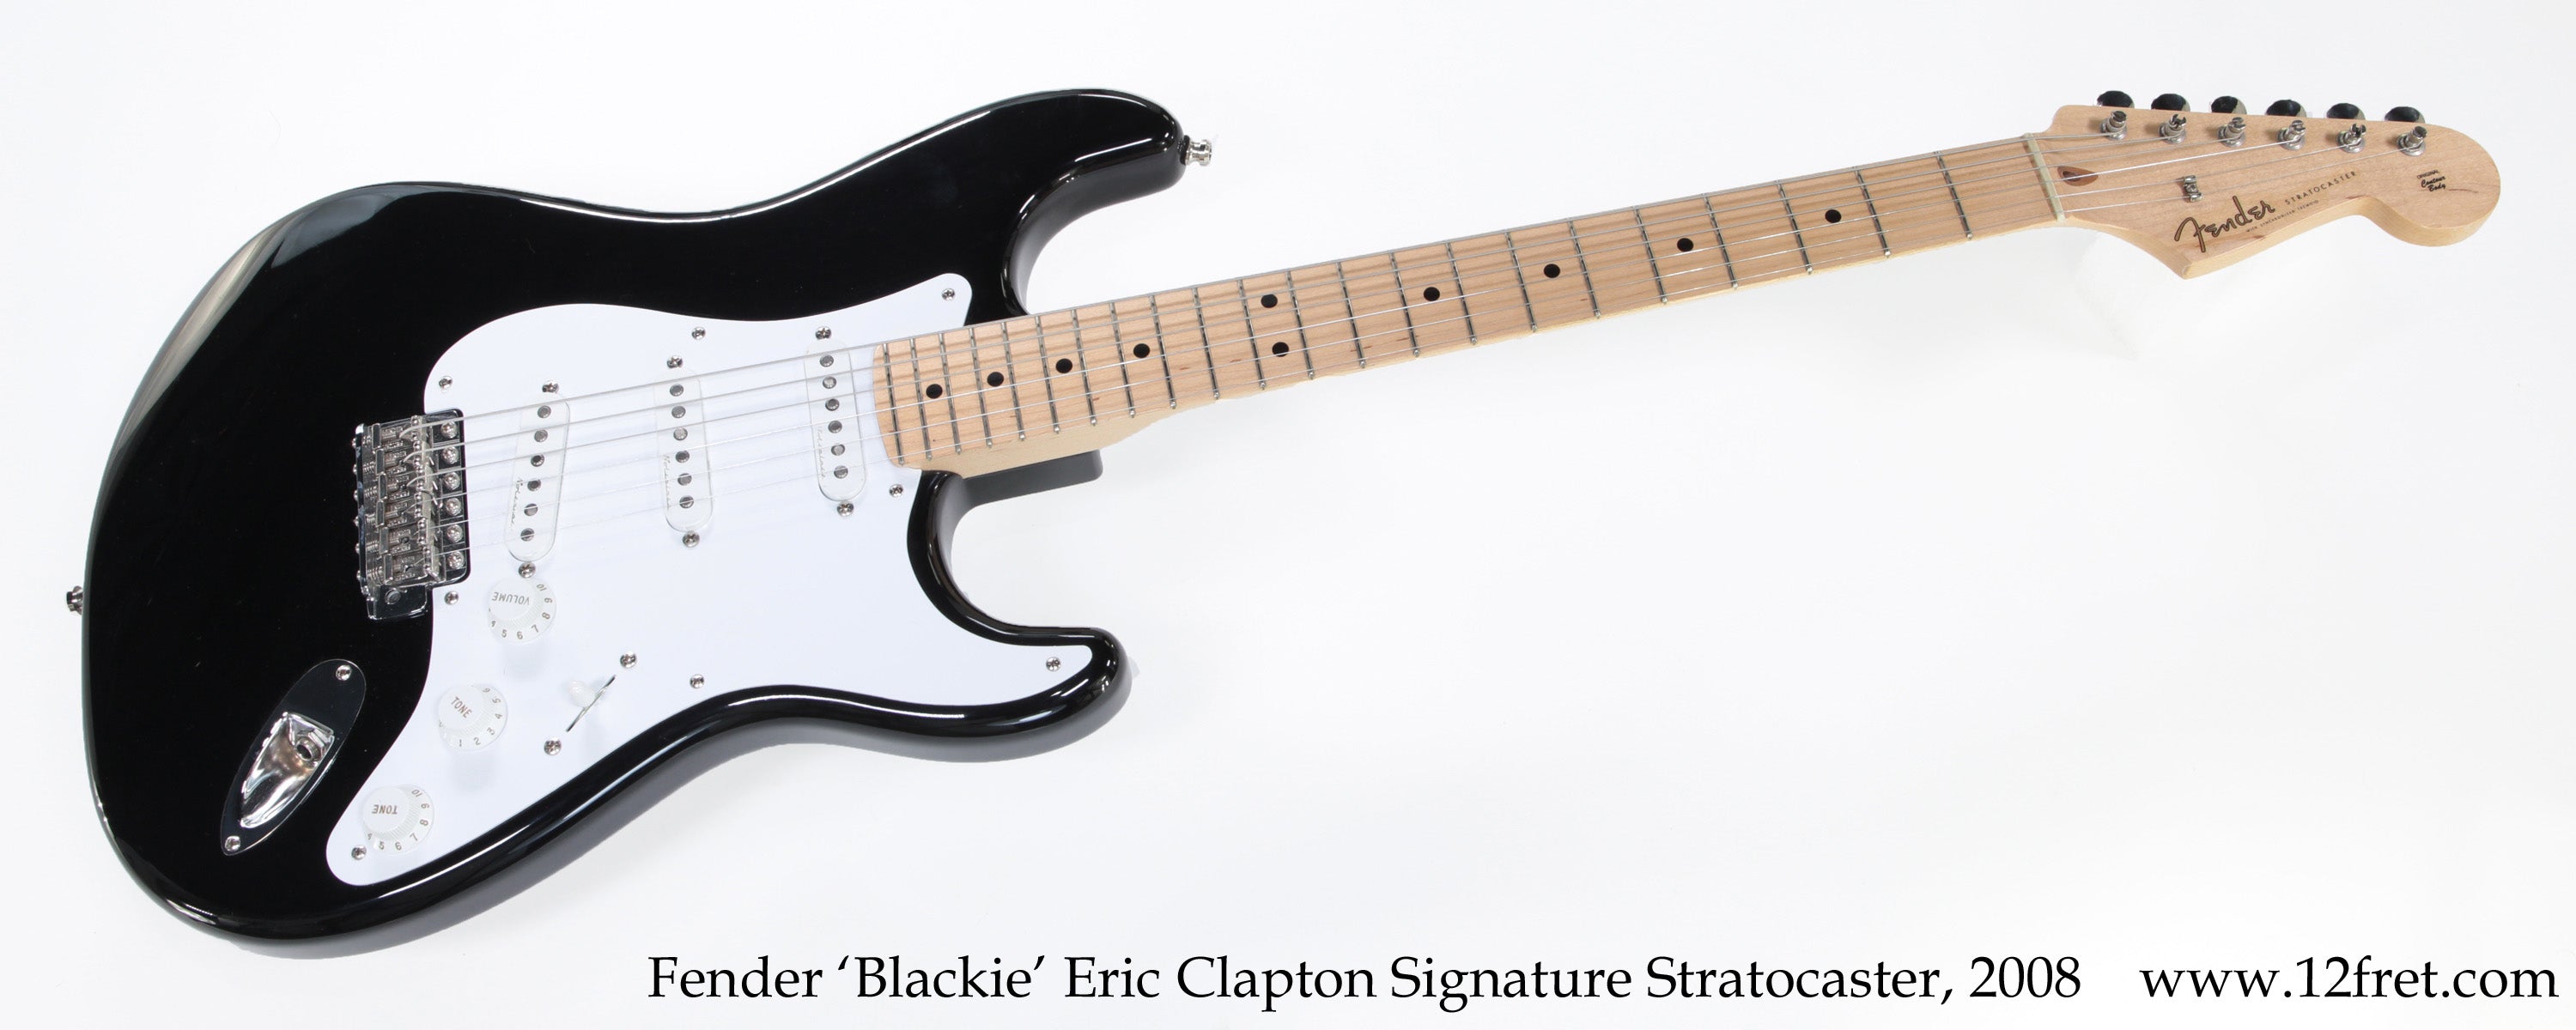 Fender Custom Shop 'Blackie' Eric Clapton Signature Stratocaster, 2008 - The Twelfth Fret